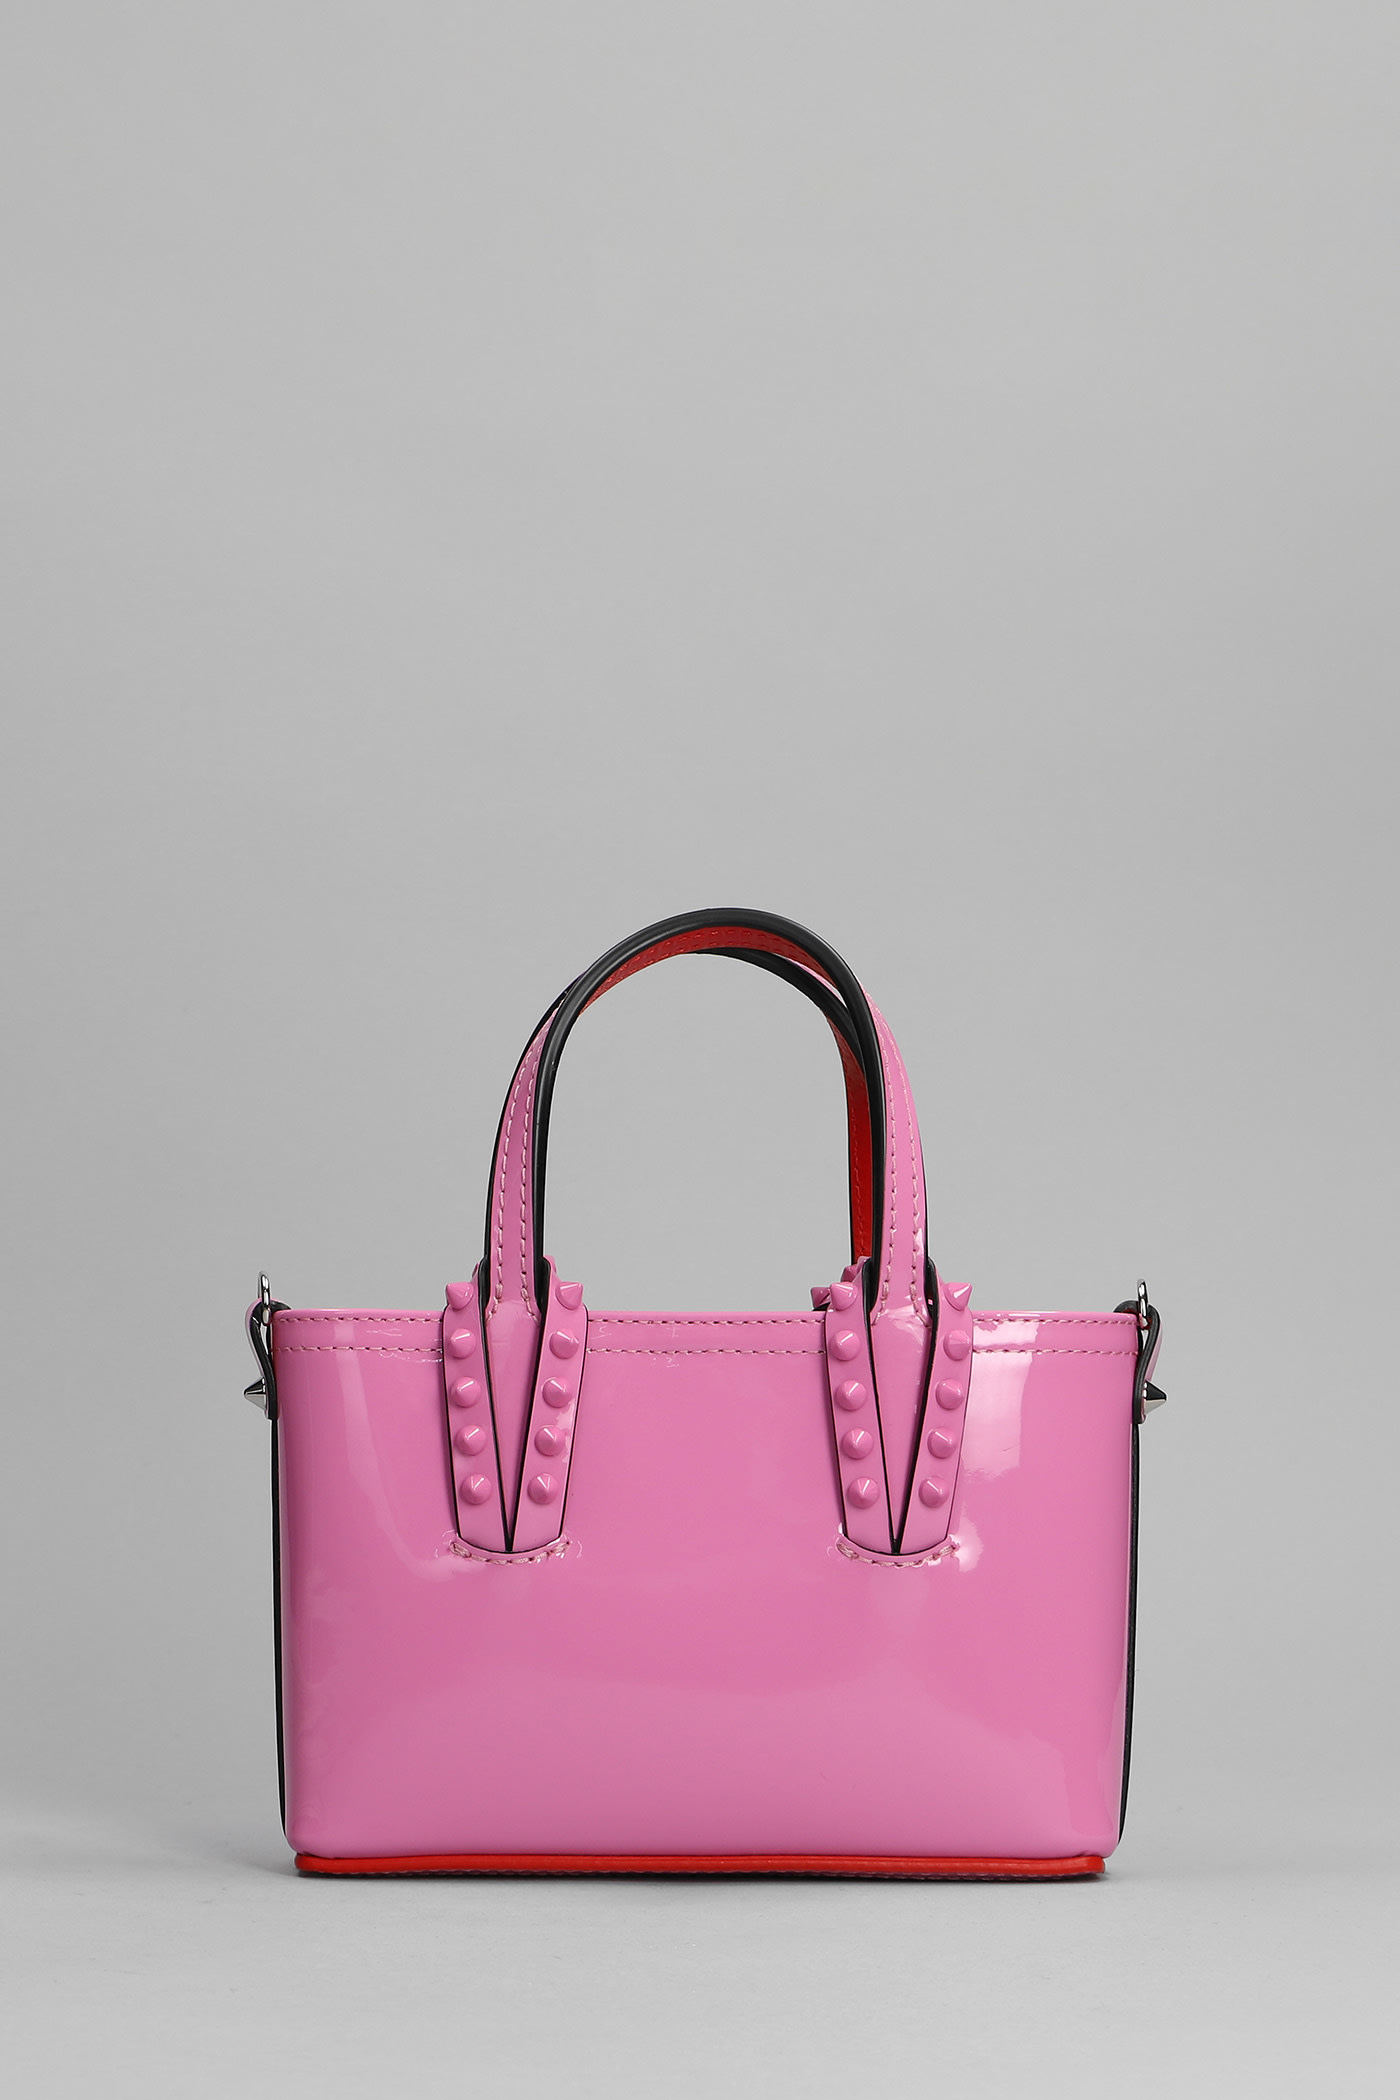 Christian Louboutin Cabata Nano Pink Tote Bag New